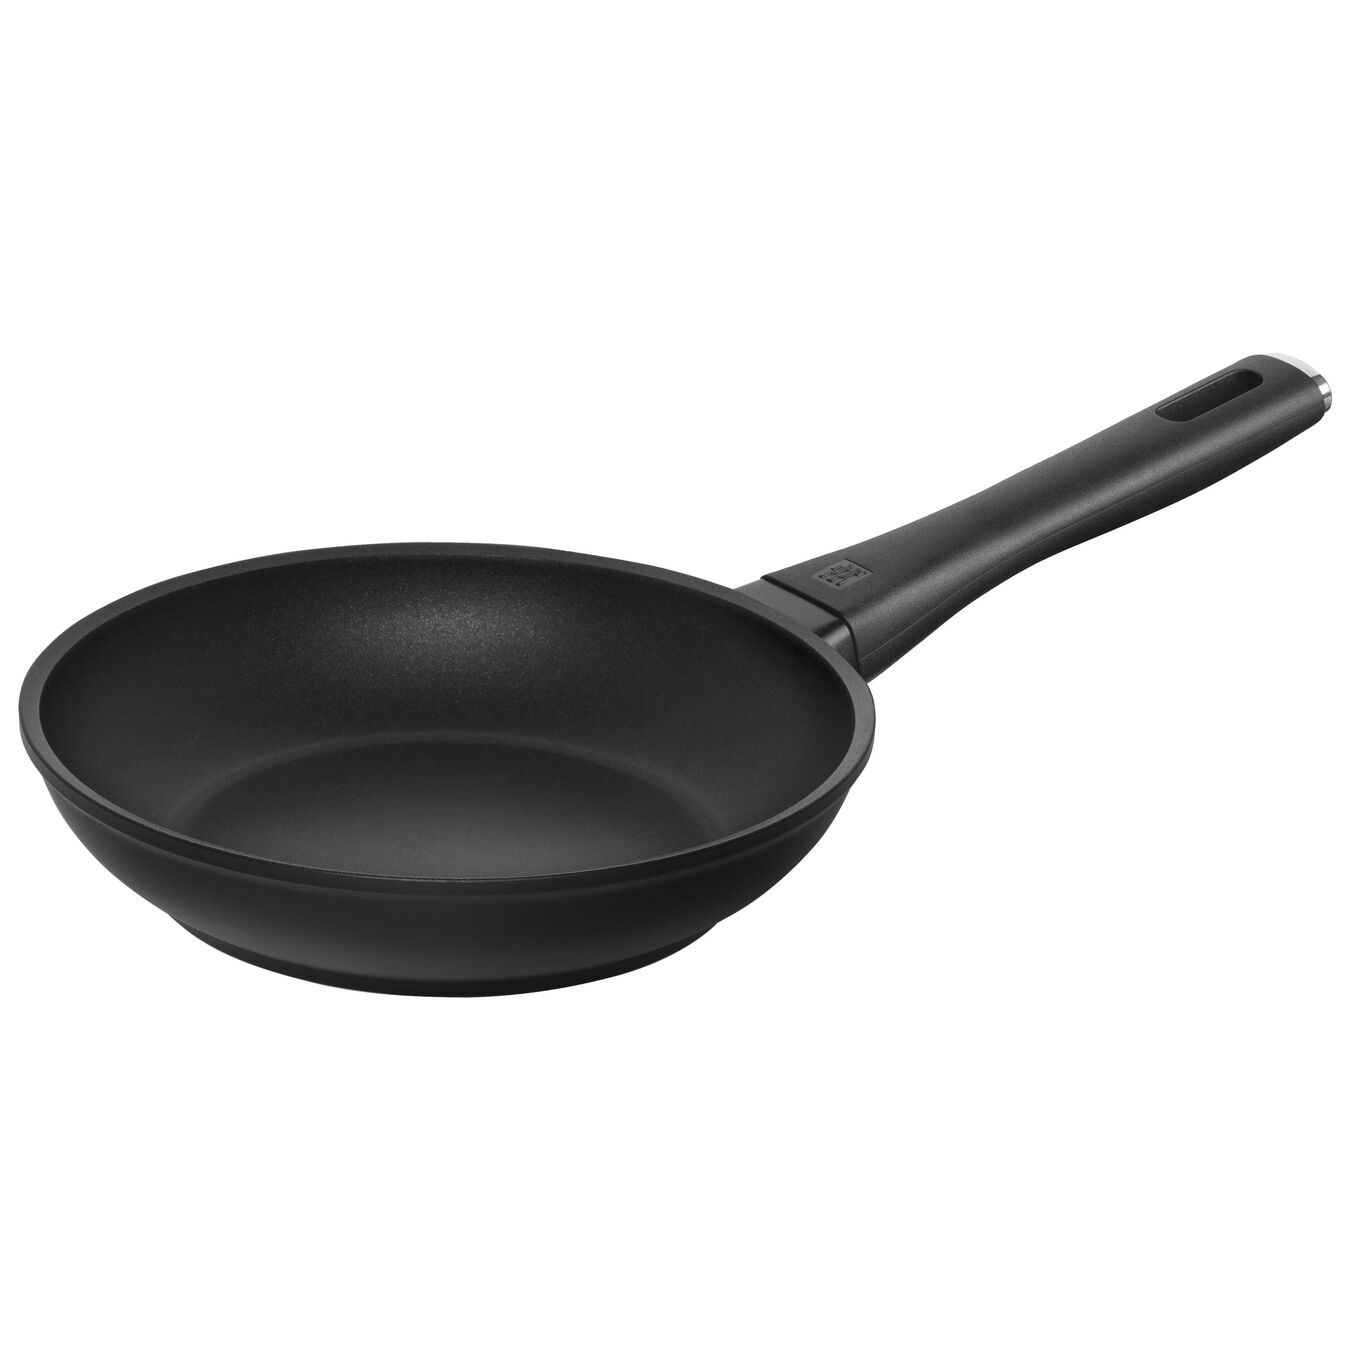 8-inch, Non-stick, Aluminum Fry Pan,,large 1